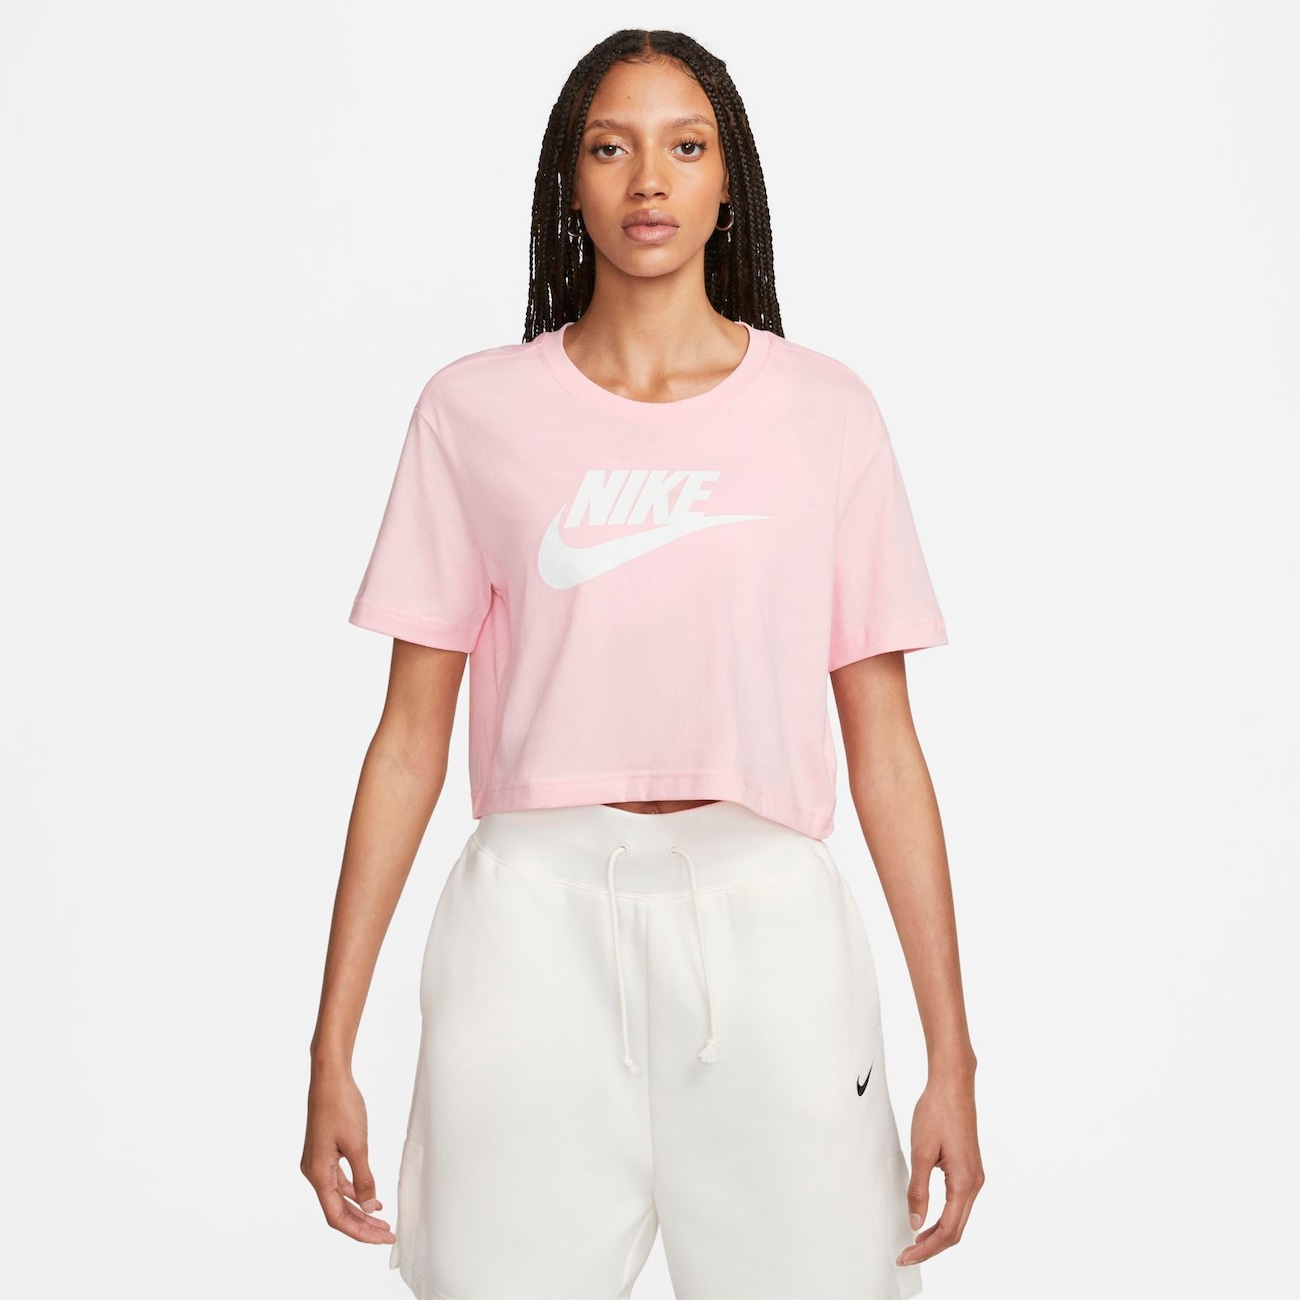 Camiseta Nike Sportswear Essential Feminina